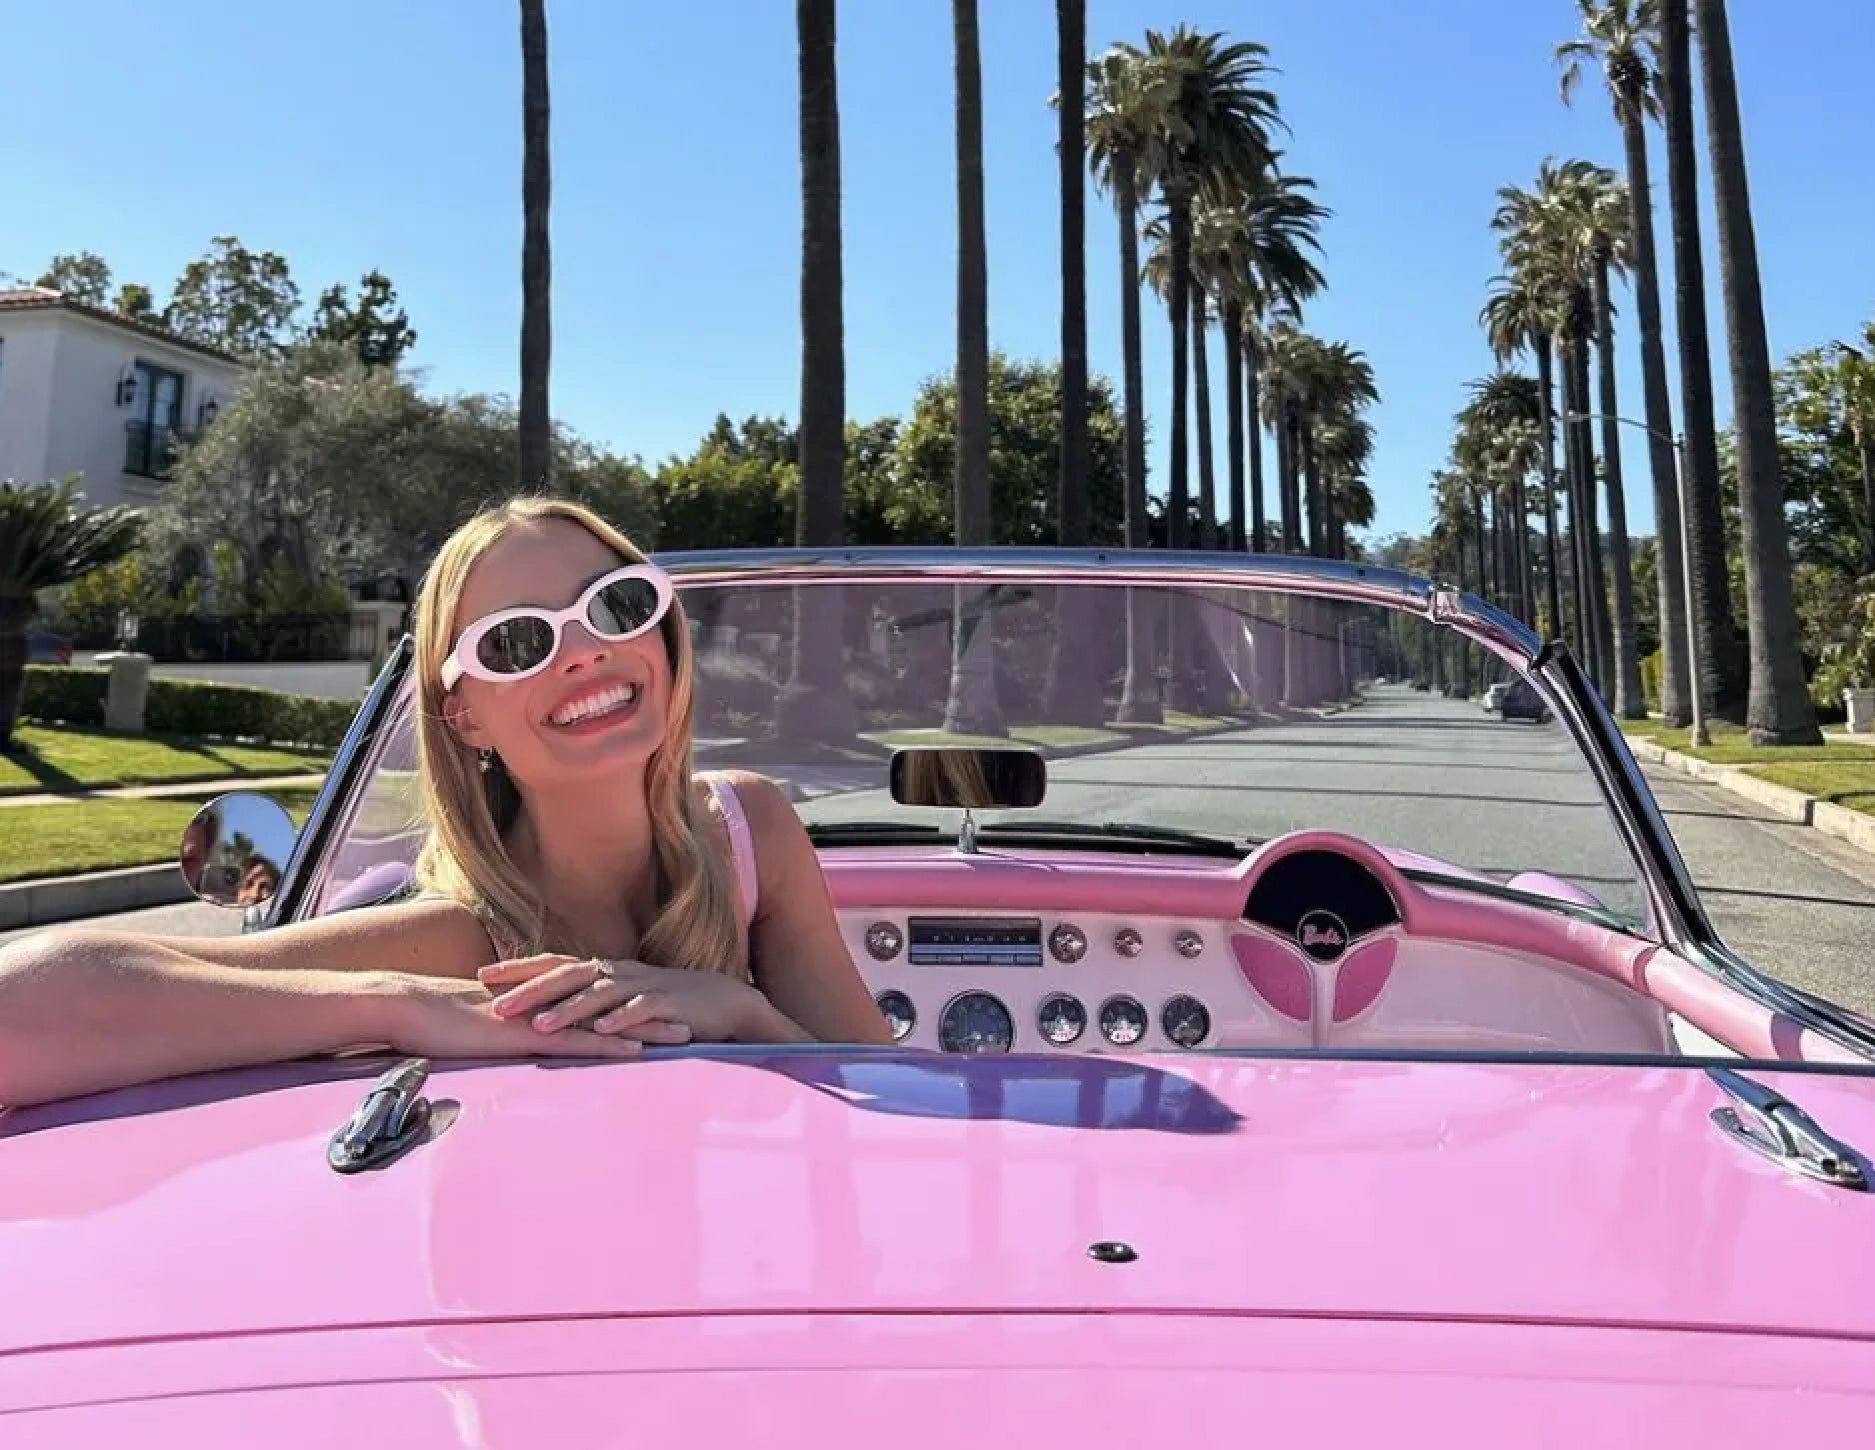 Margot robbie con outfit de Barbie en carro descapotable